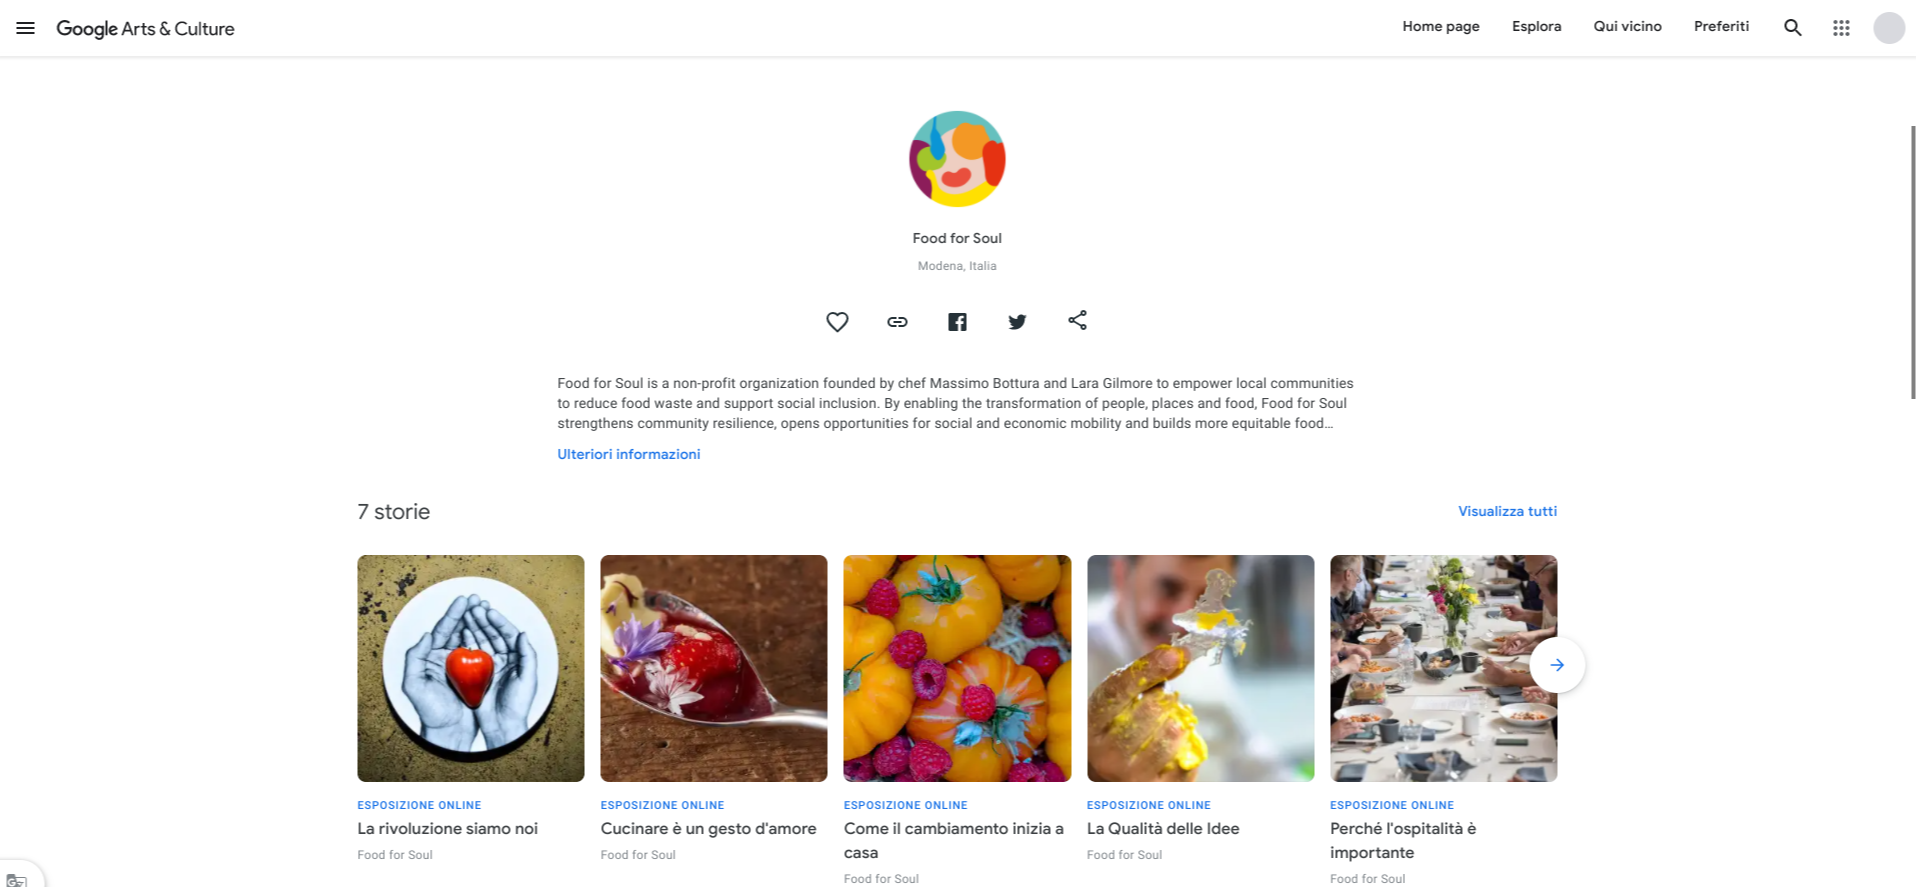 Landing page di Food for Soul su Google Arts & Culture.